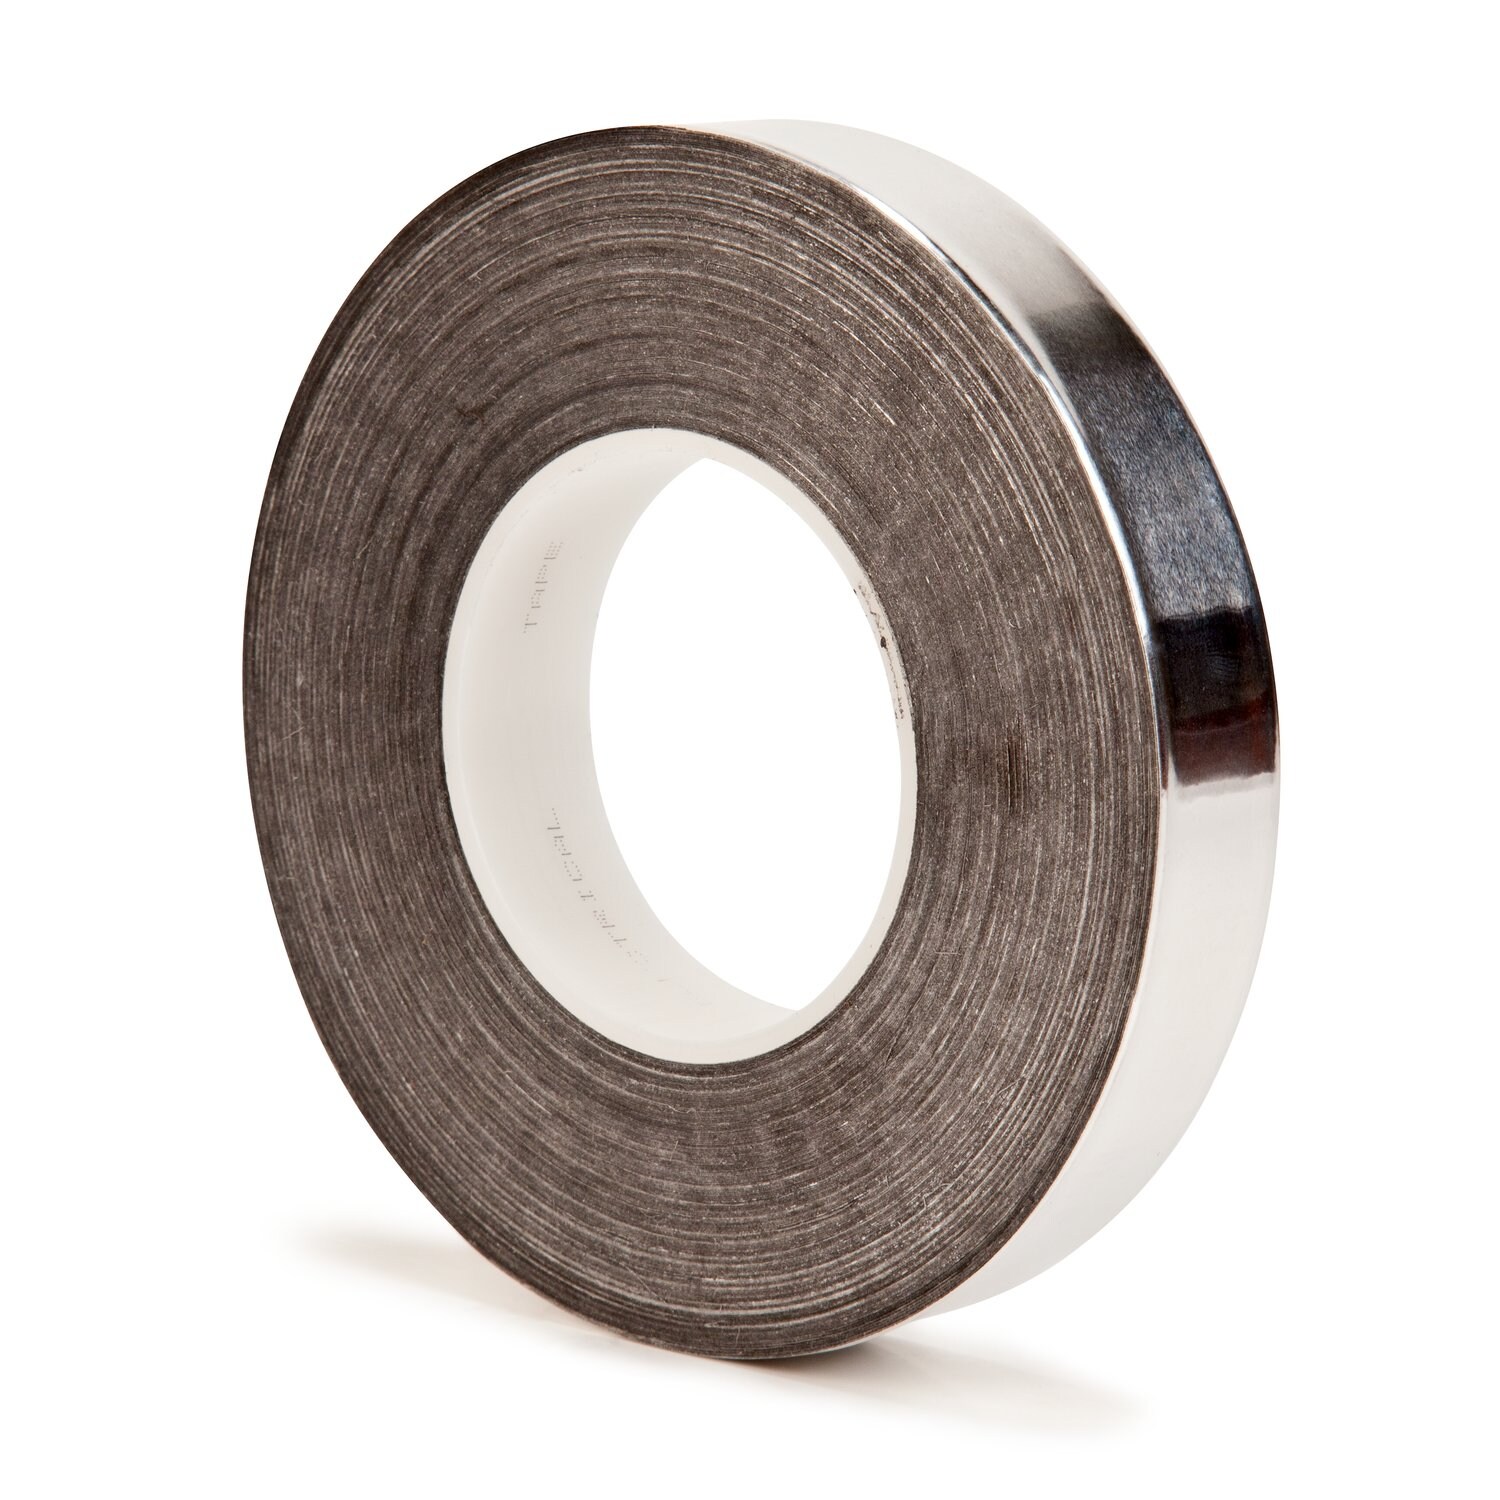 7010398060 - 3M Aluminum Foil Tape 1115B, 10.629 in x 60 yd, 4.5 mil, 3 in core,
Silver, 1 Roll/Case